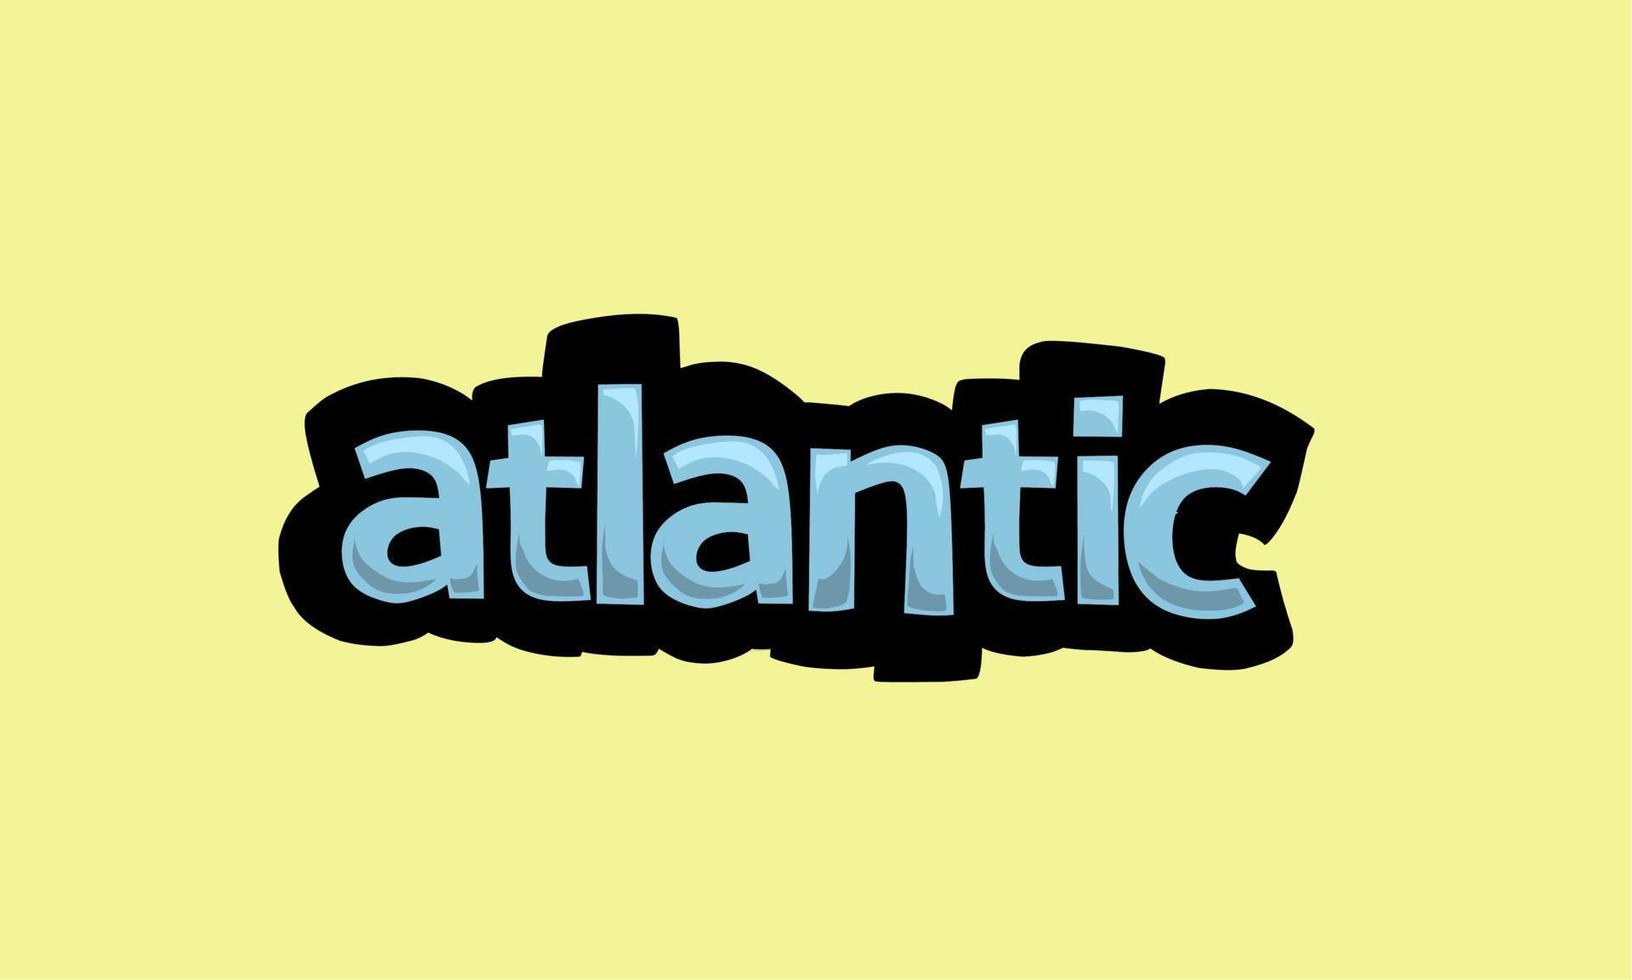 diseño vectorial de escritura atlántica sobre un fondo amarillo vector